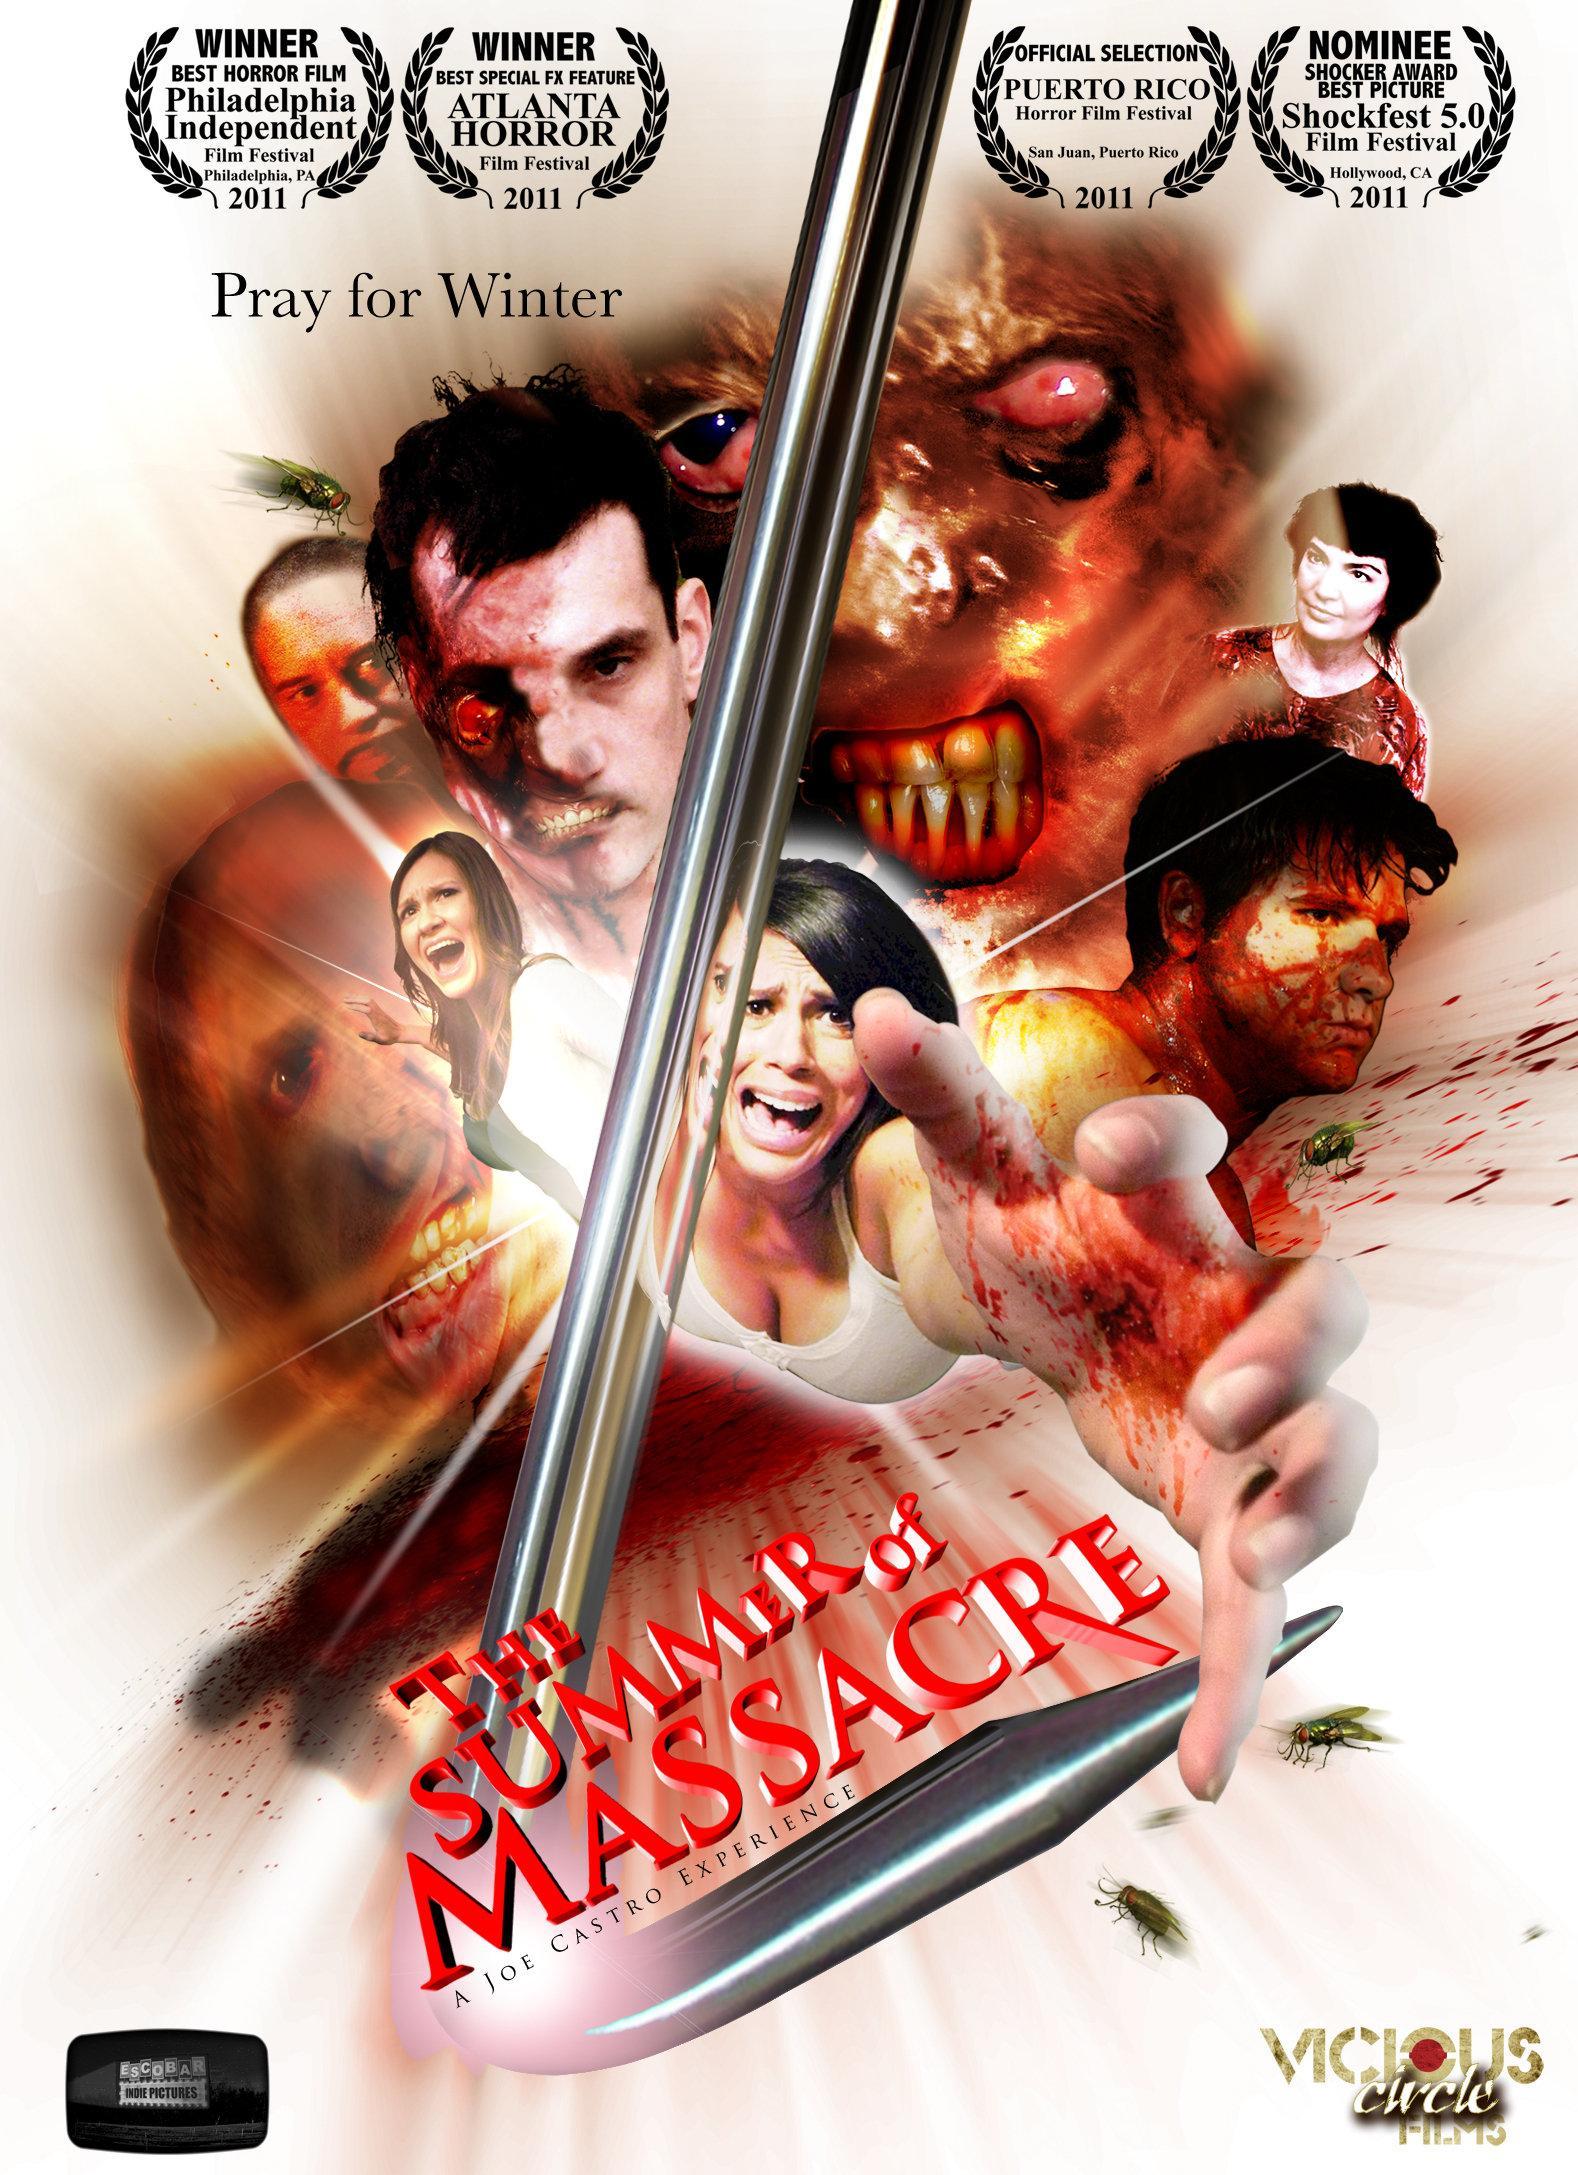 Постер фильма Summer of Massacre